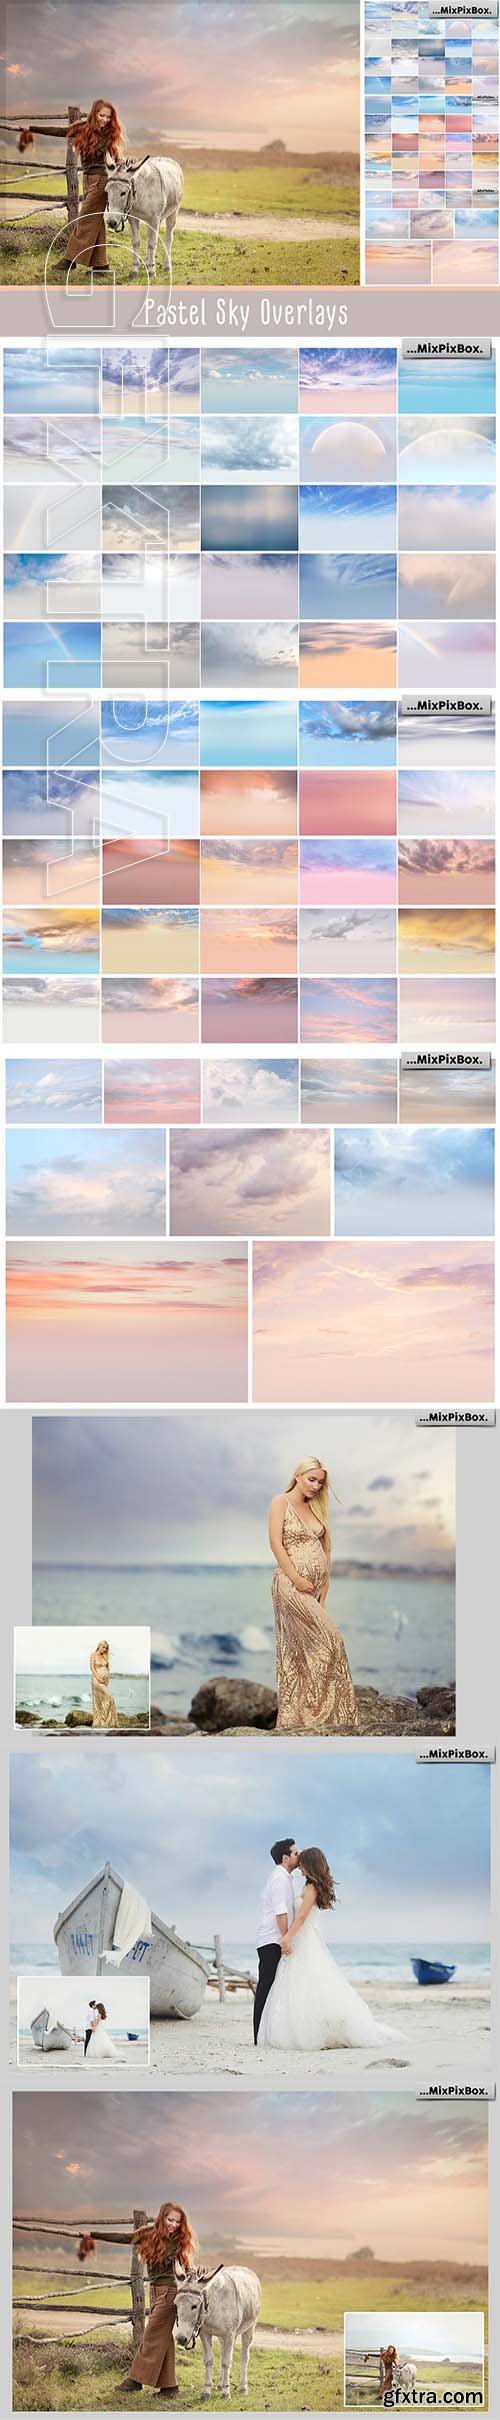 CreativeMarket - Pastel sky overlays 2579009